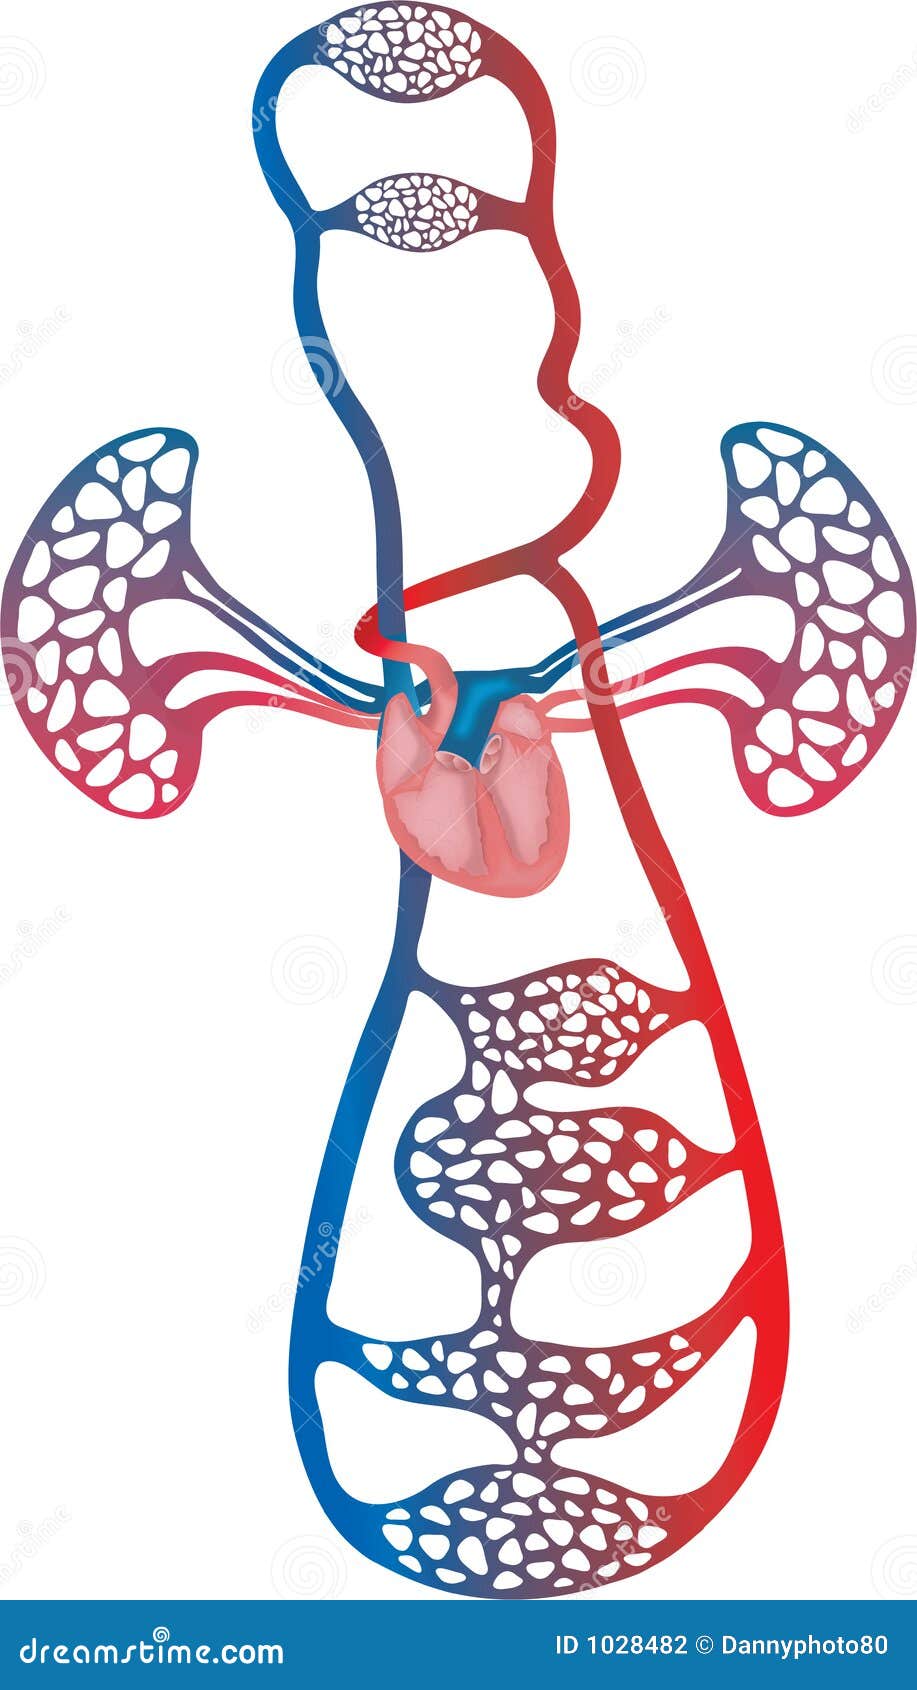 Circulatory System stock illustration. Illustration of computer - 1028482